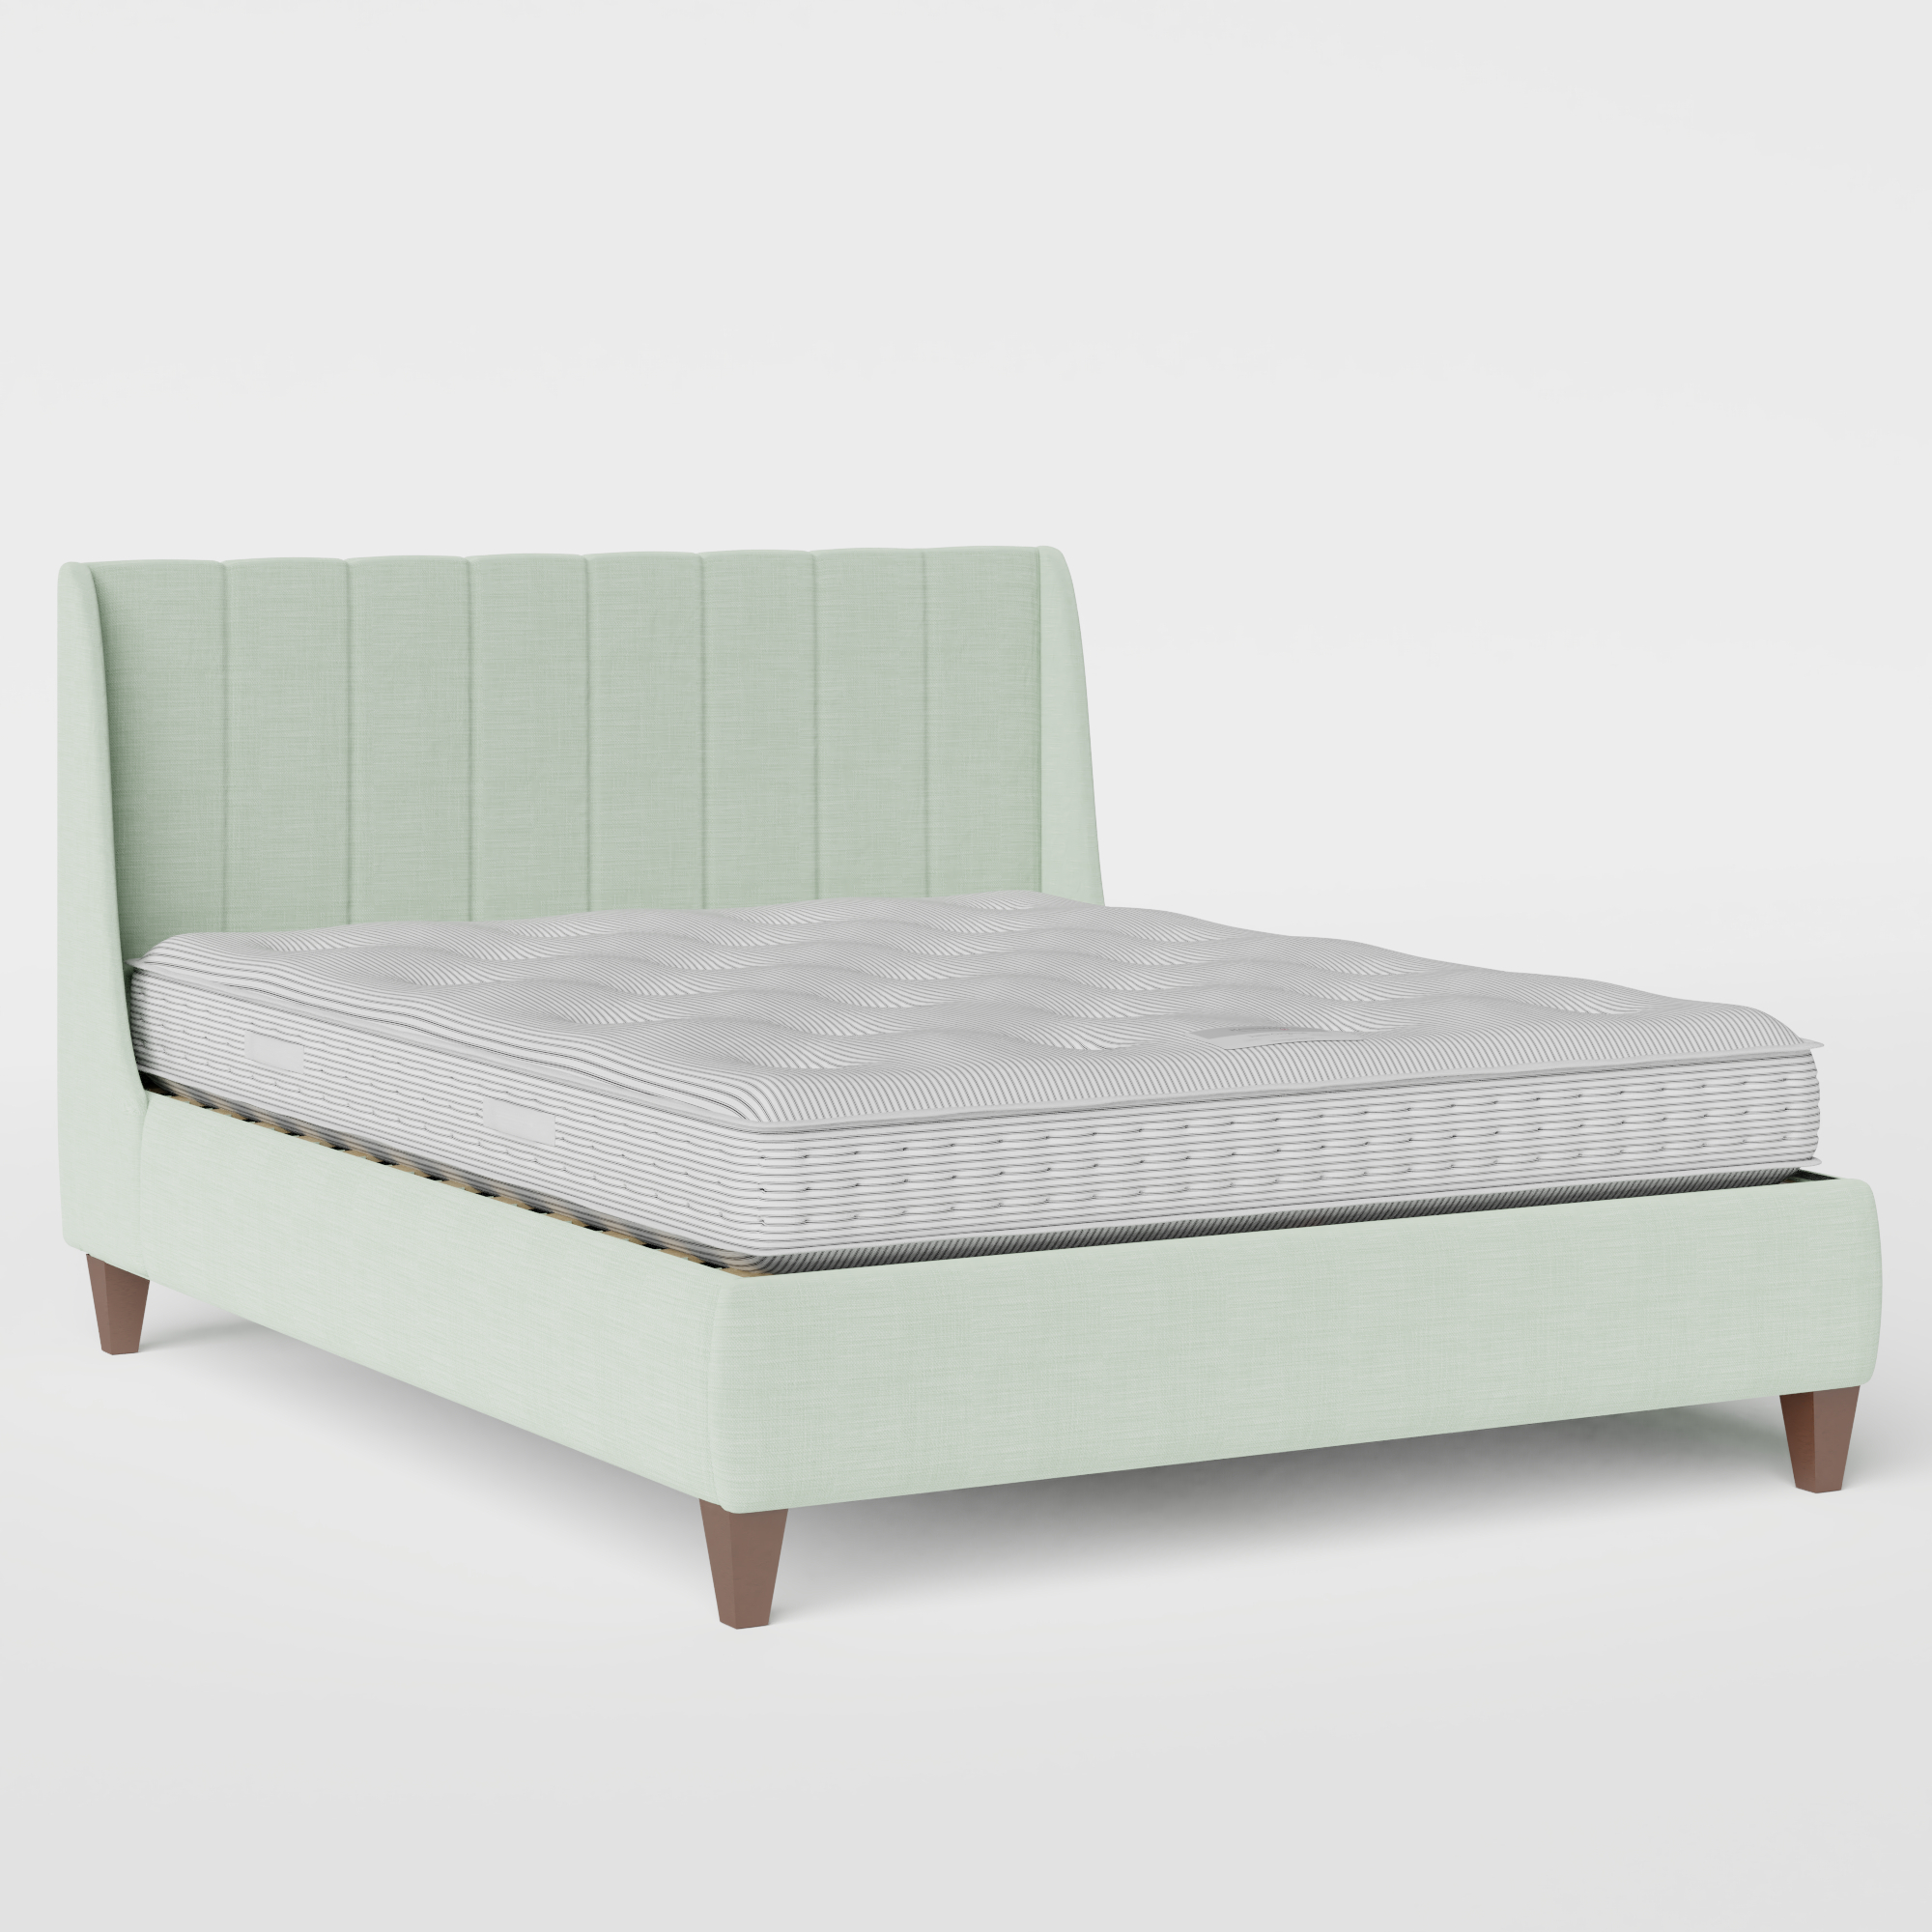 Sunderland Pleated upholstered bed in duckegg fabric